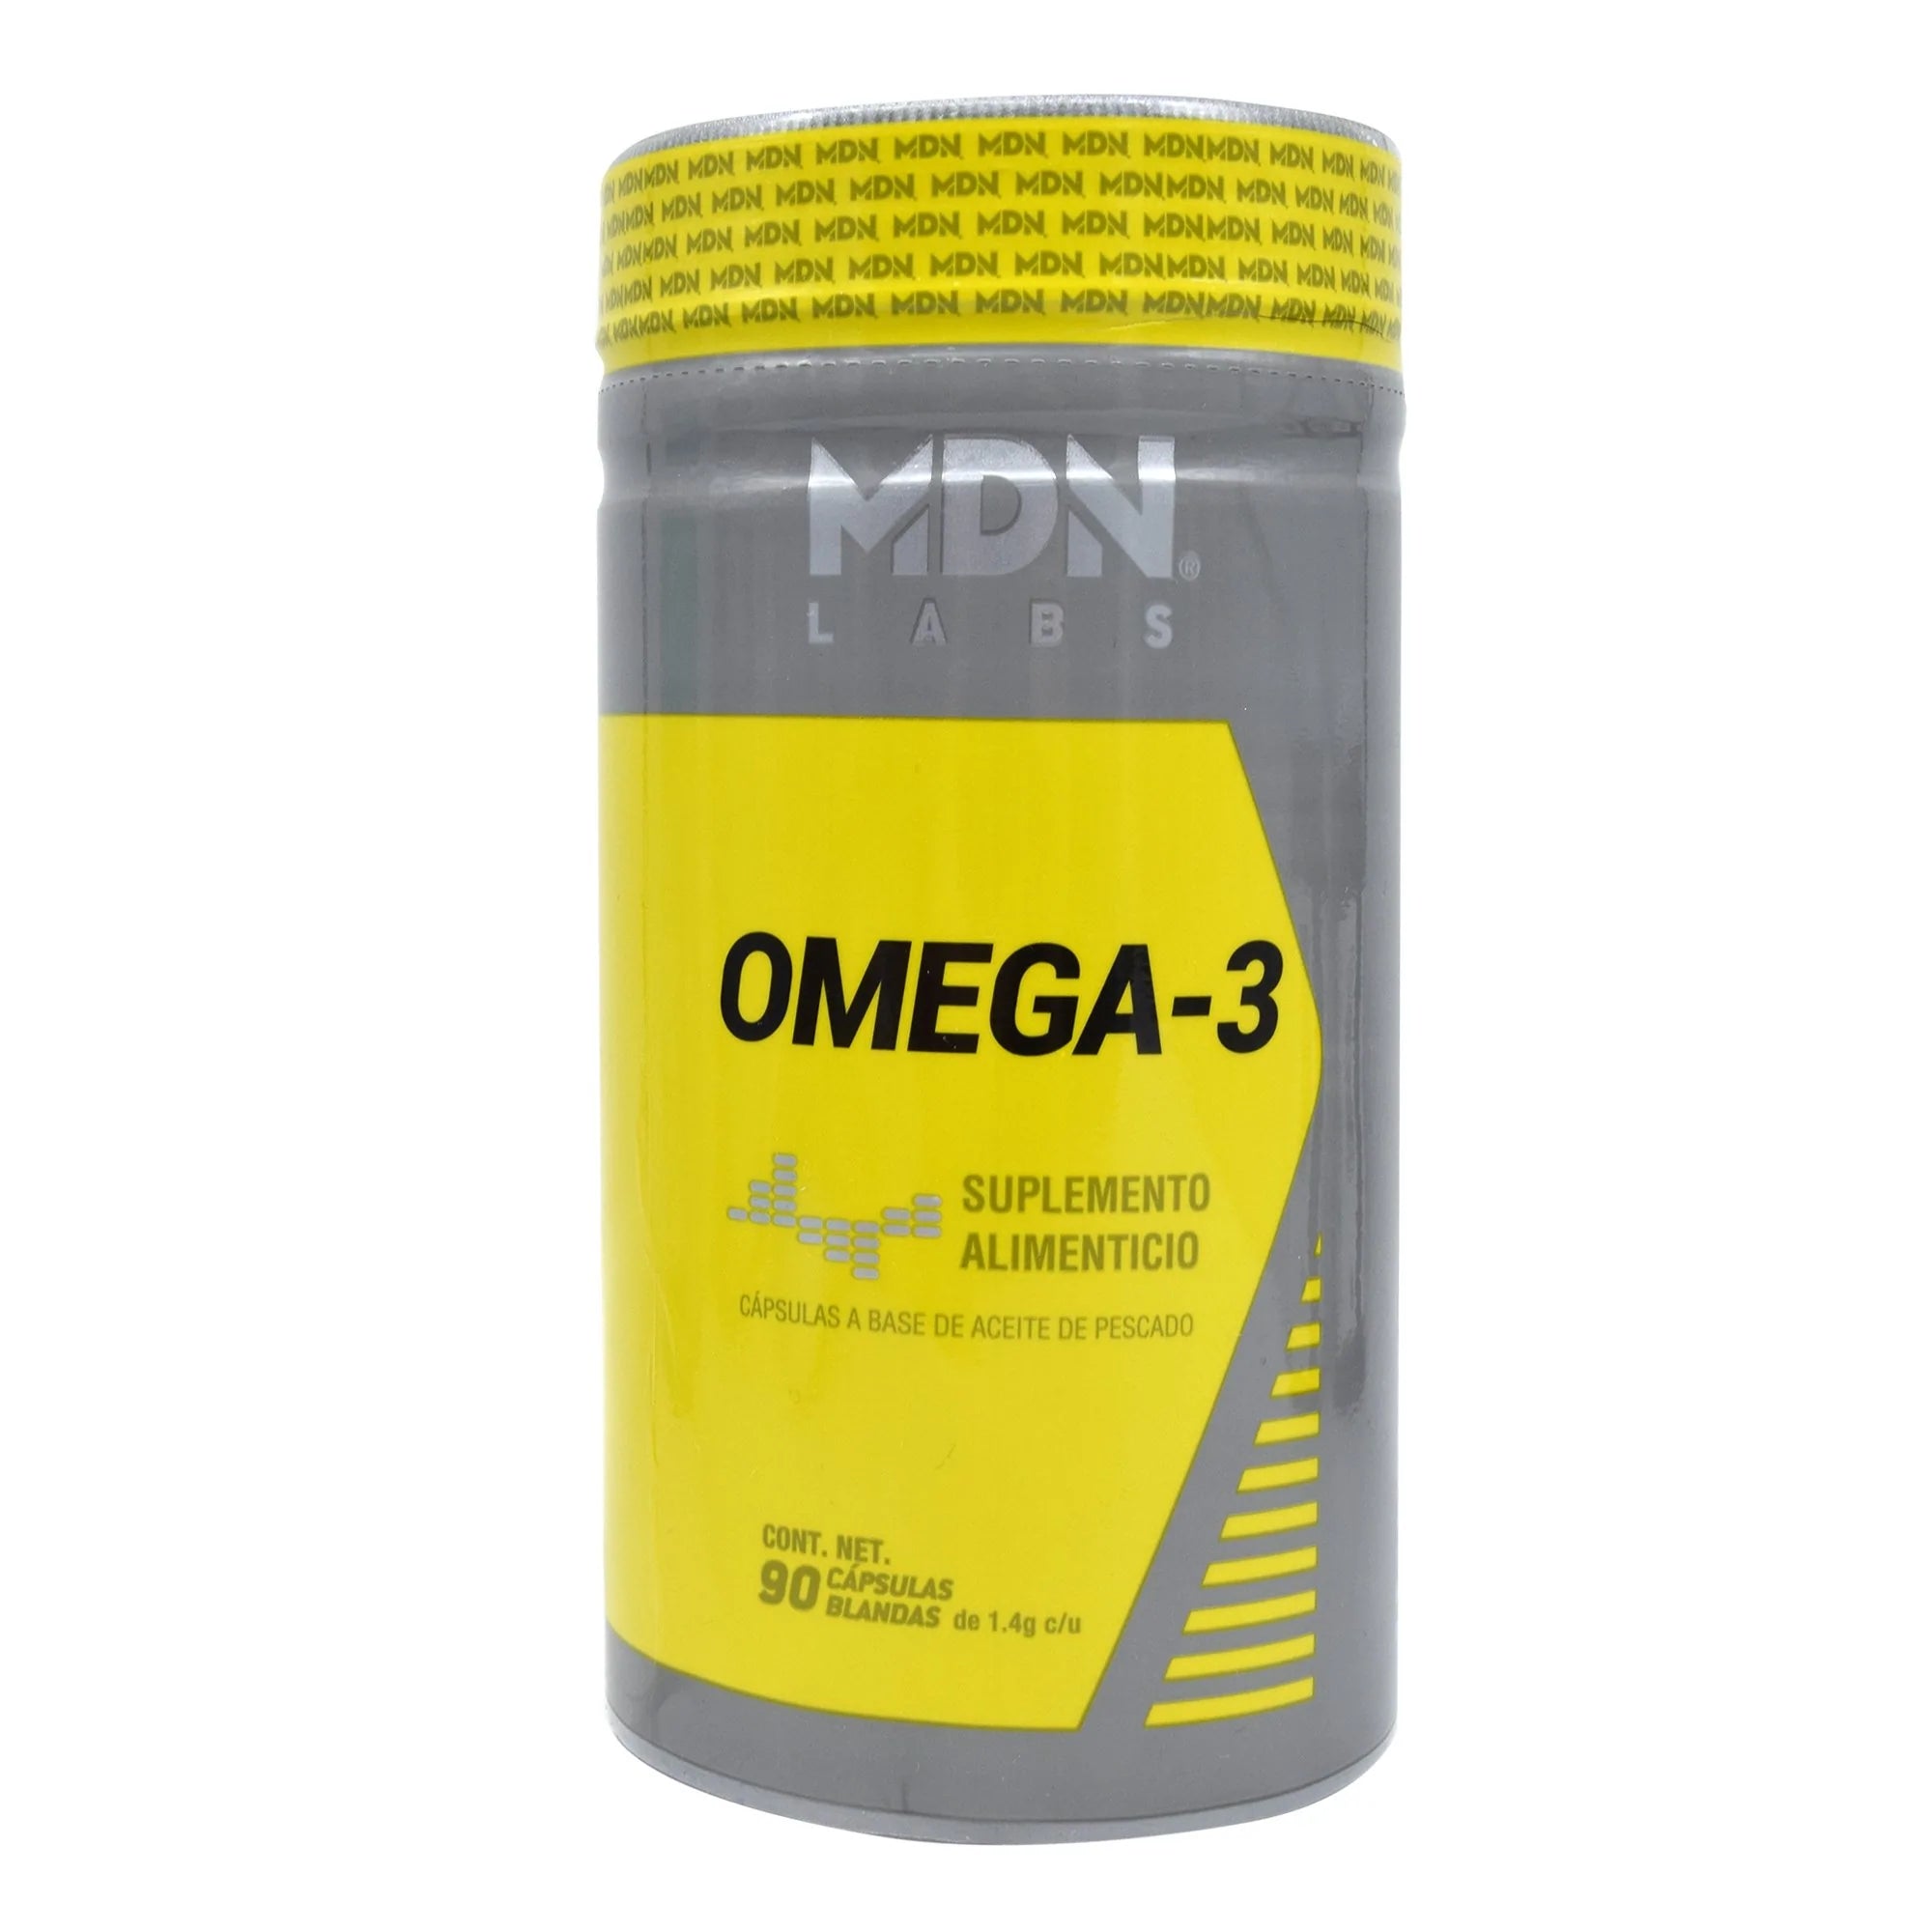 Mdn Omega-3, 90 Cápsulas